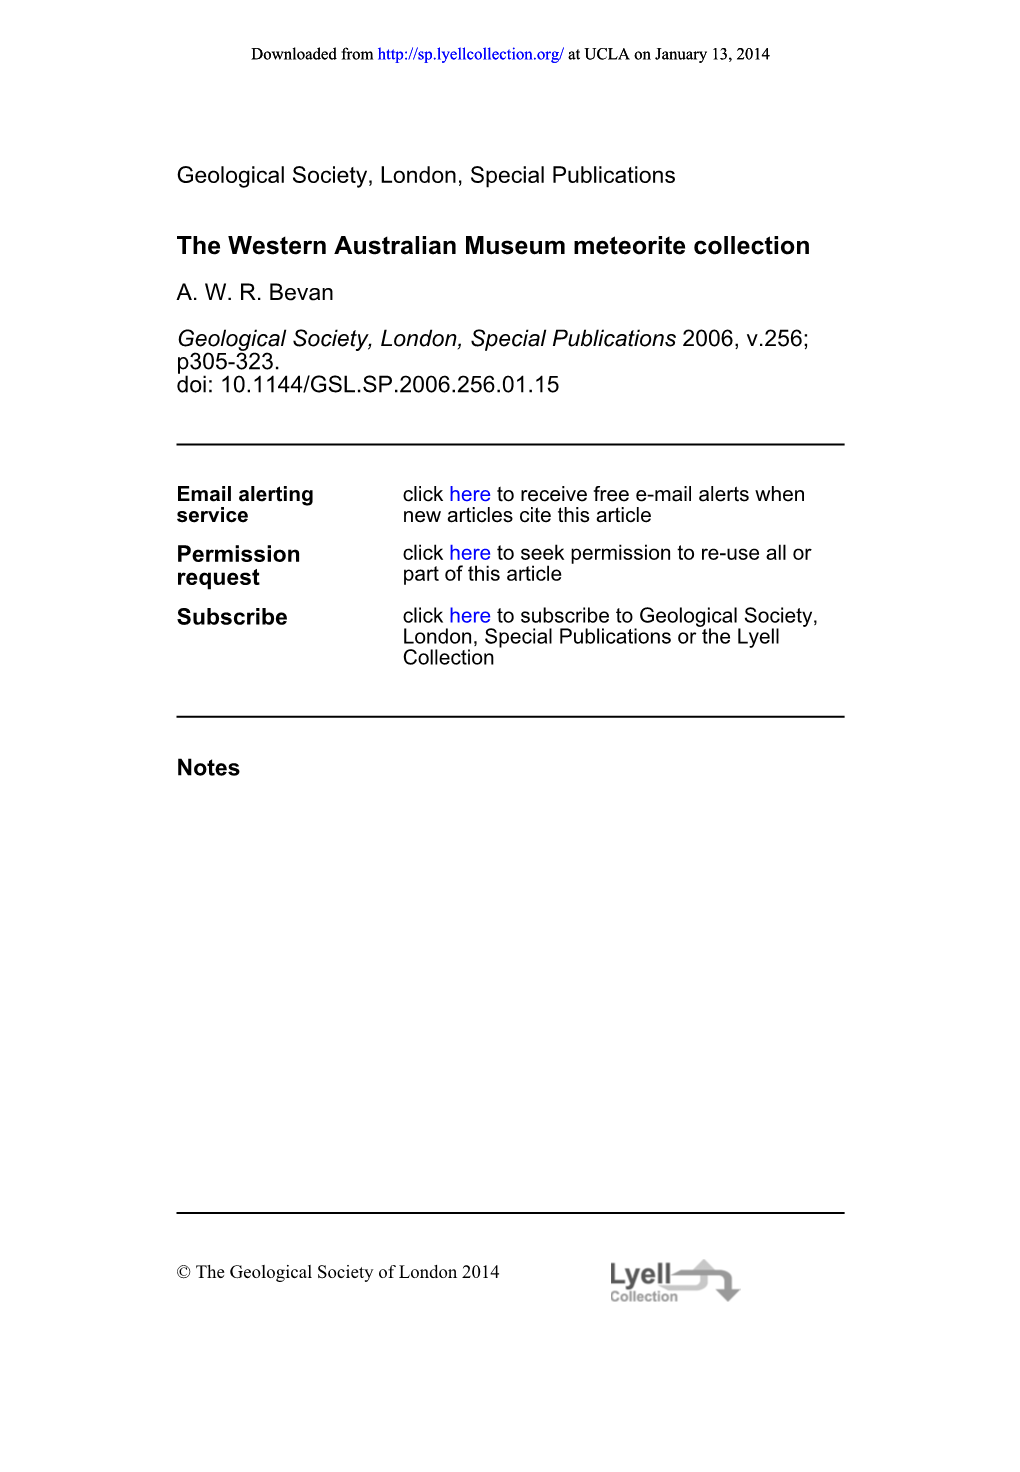 The Western Australian Museum Meteorite Collection, by Alex Bevan